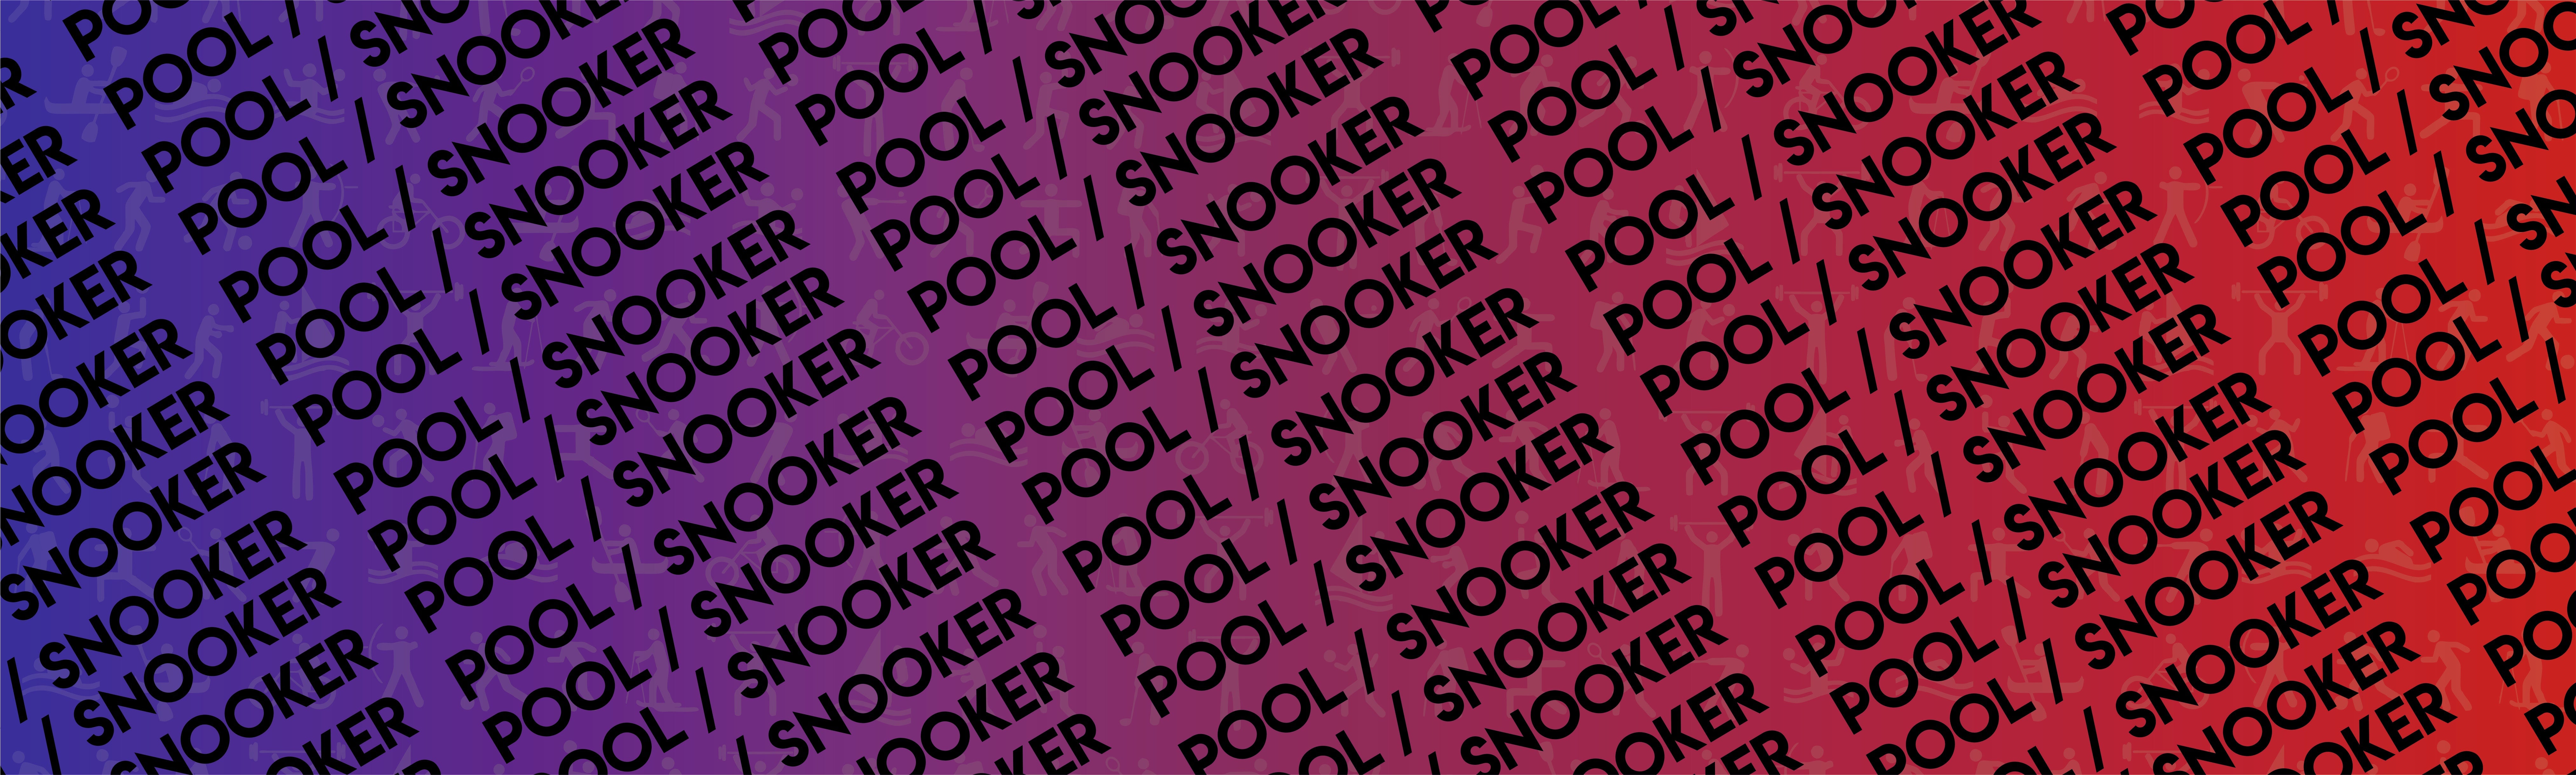 Pool/Snooker